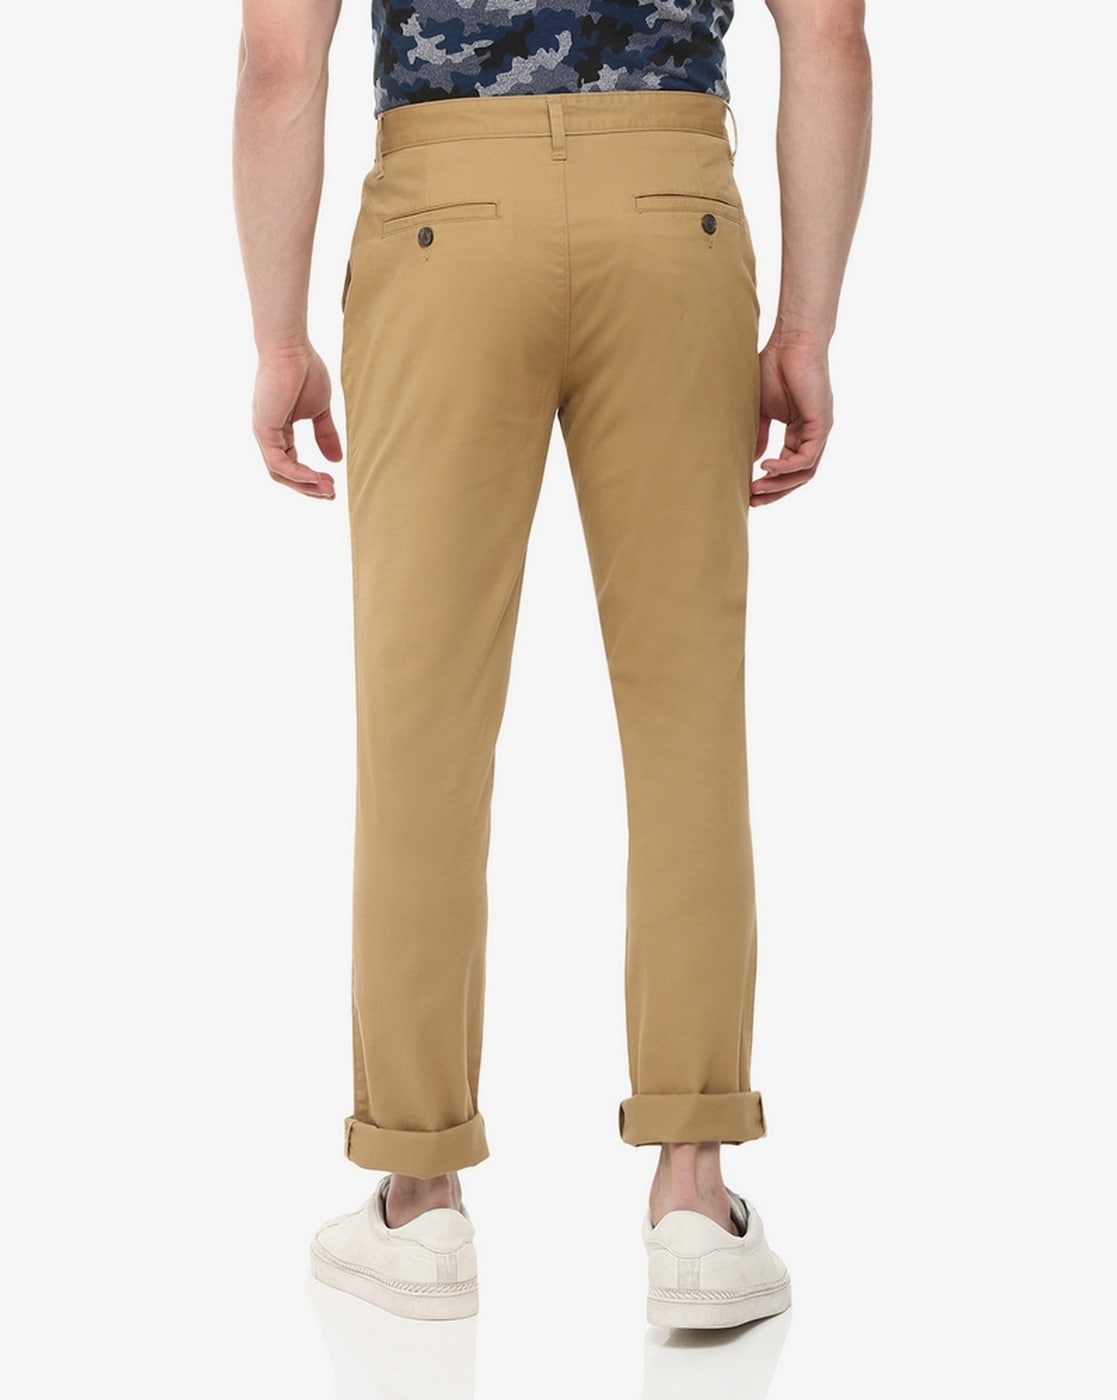 Buy Camel Brown Trousers  Pants for Men by DJ  C Online  Ajiocom